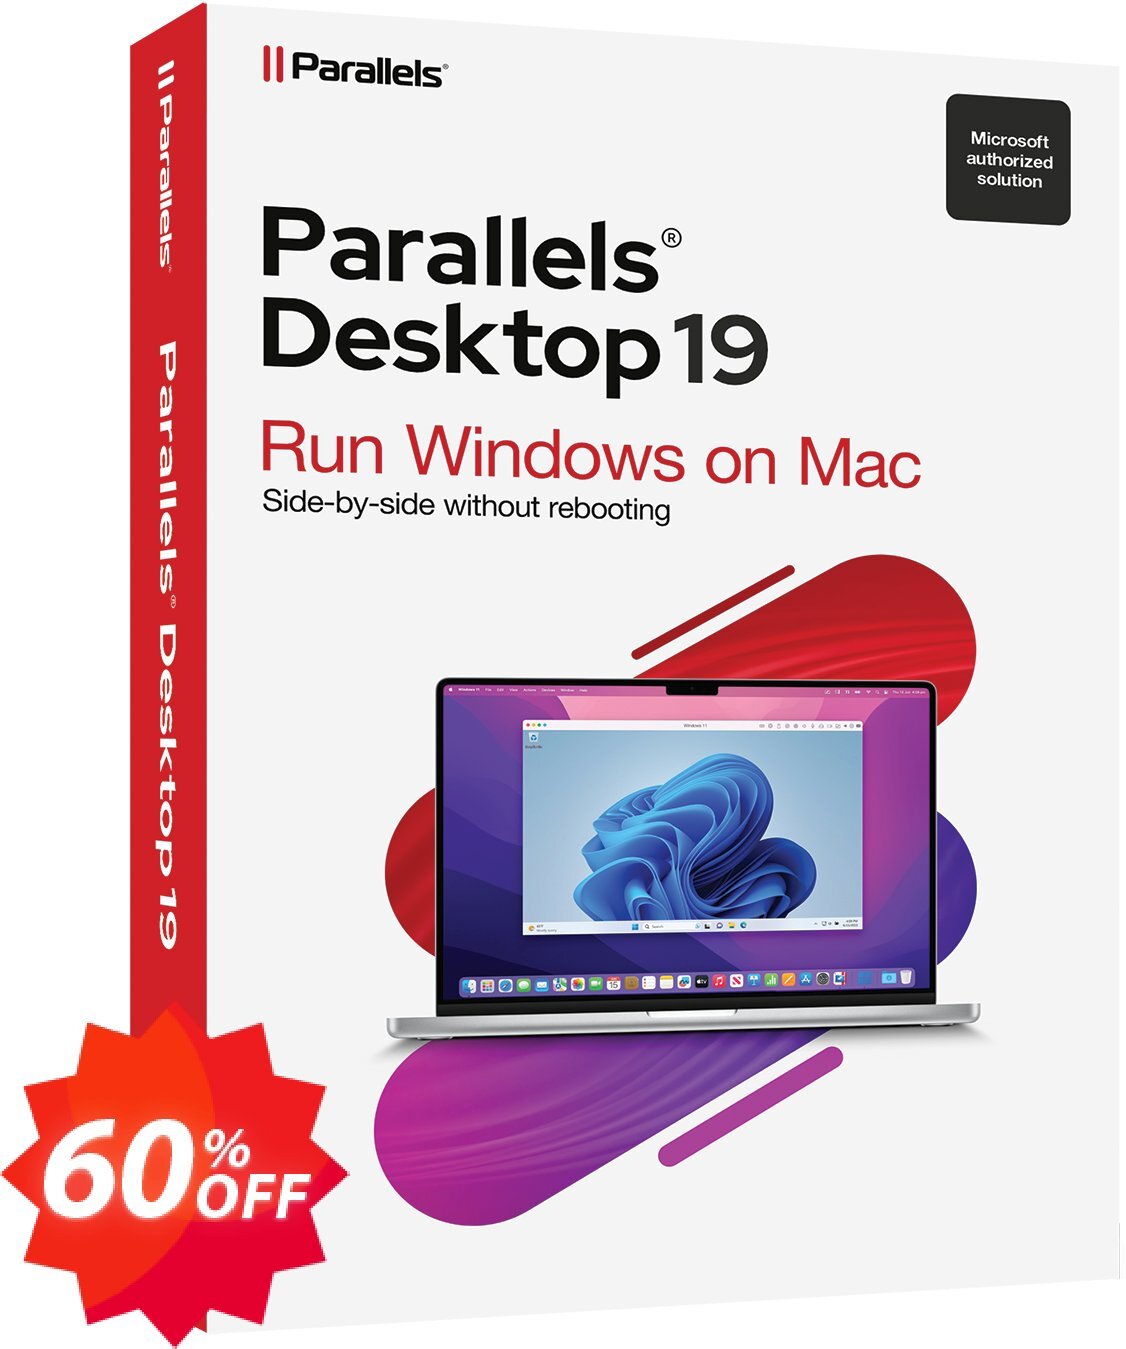 Parallels Desktop 19 Student Edition Coupon code 60% discount 